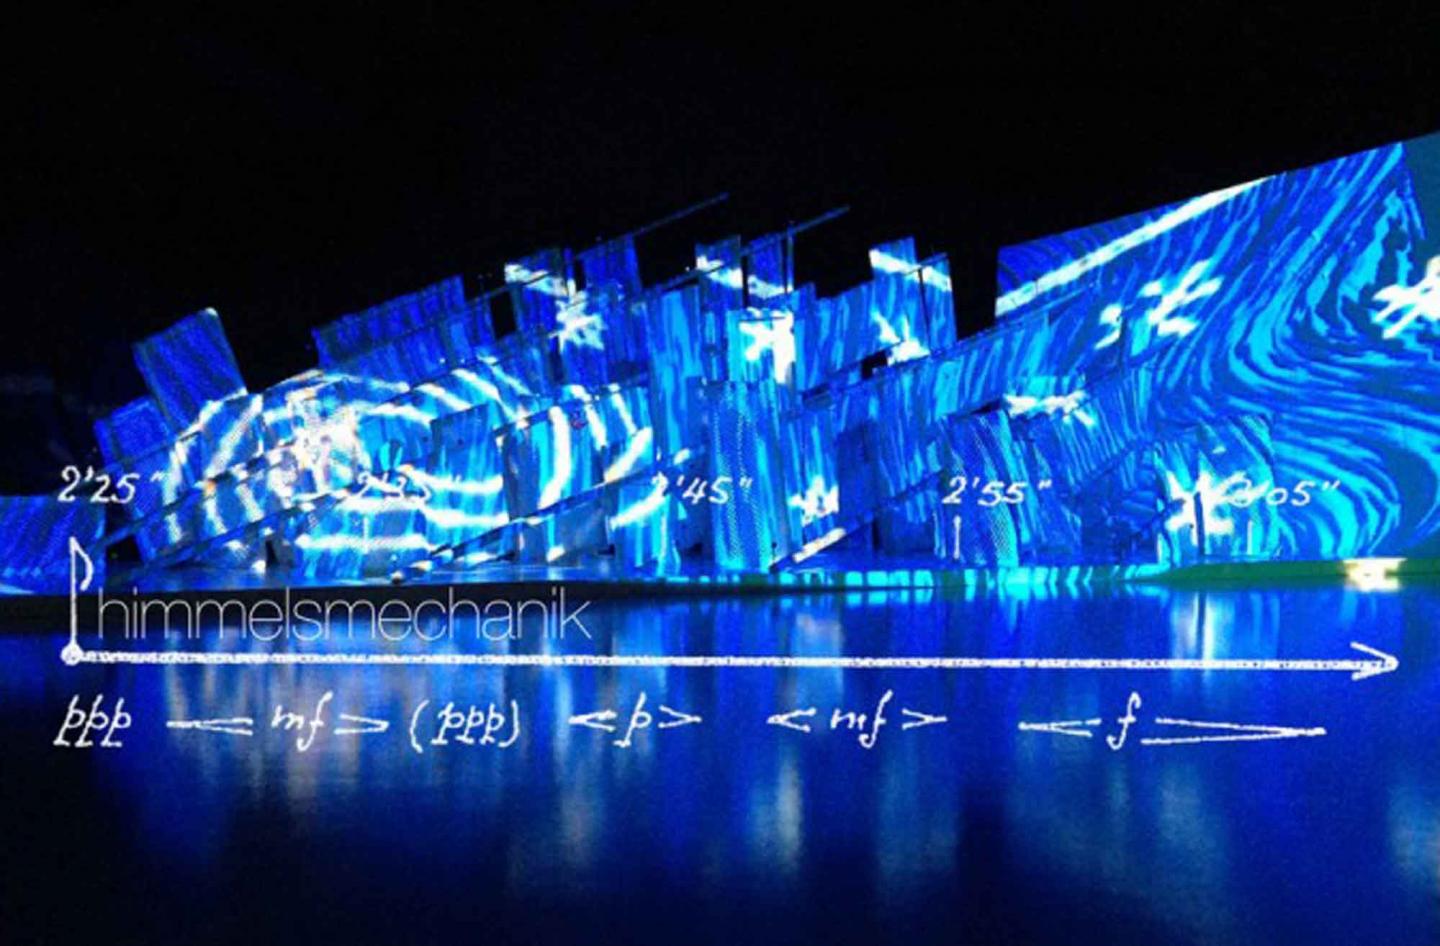 LHC data triggers operatic visuals in Berlin